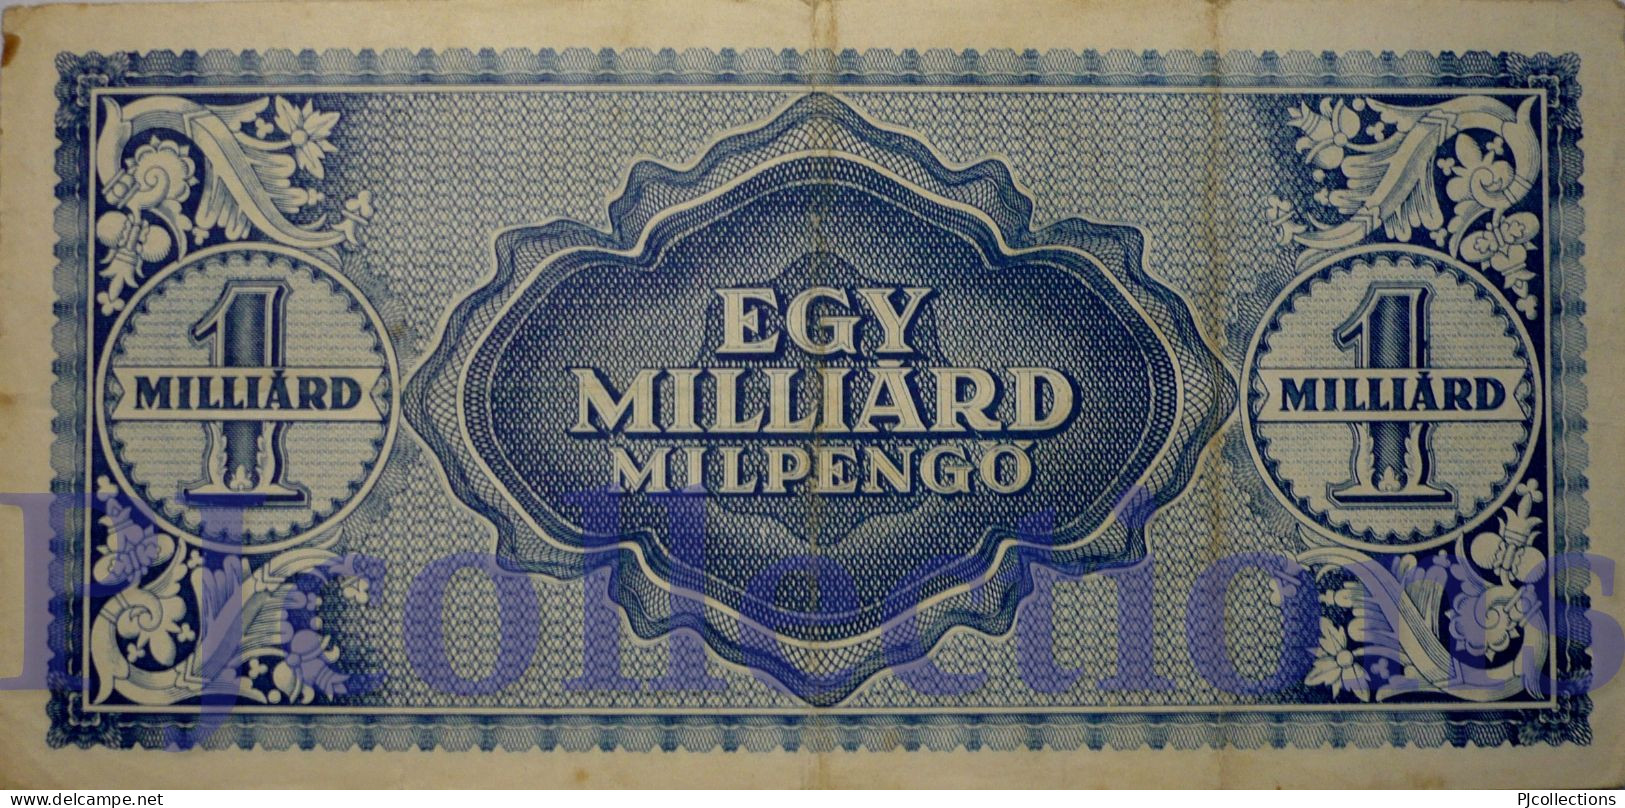 HUNGARY 1 MILIARD MILPENGO 1946 PICK 131 VF+ - Ungheria